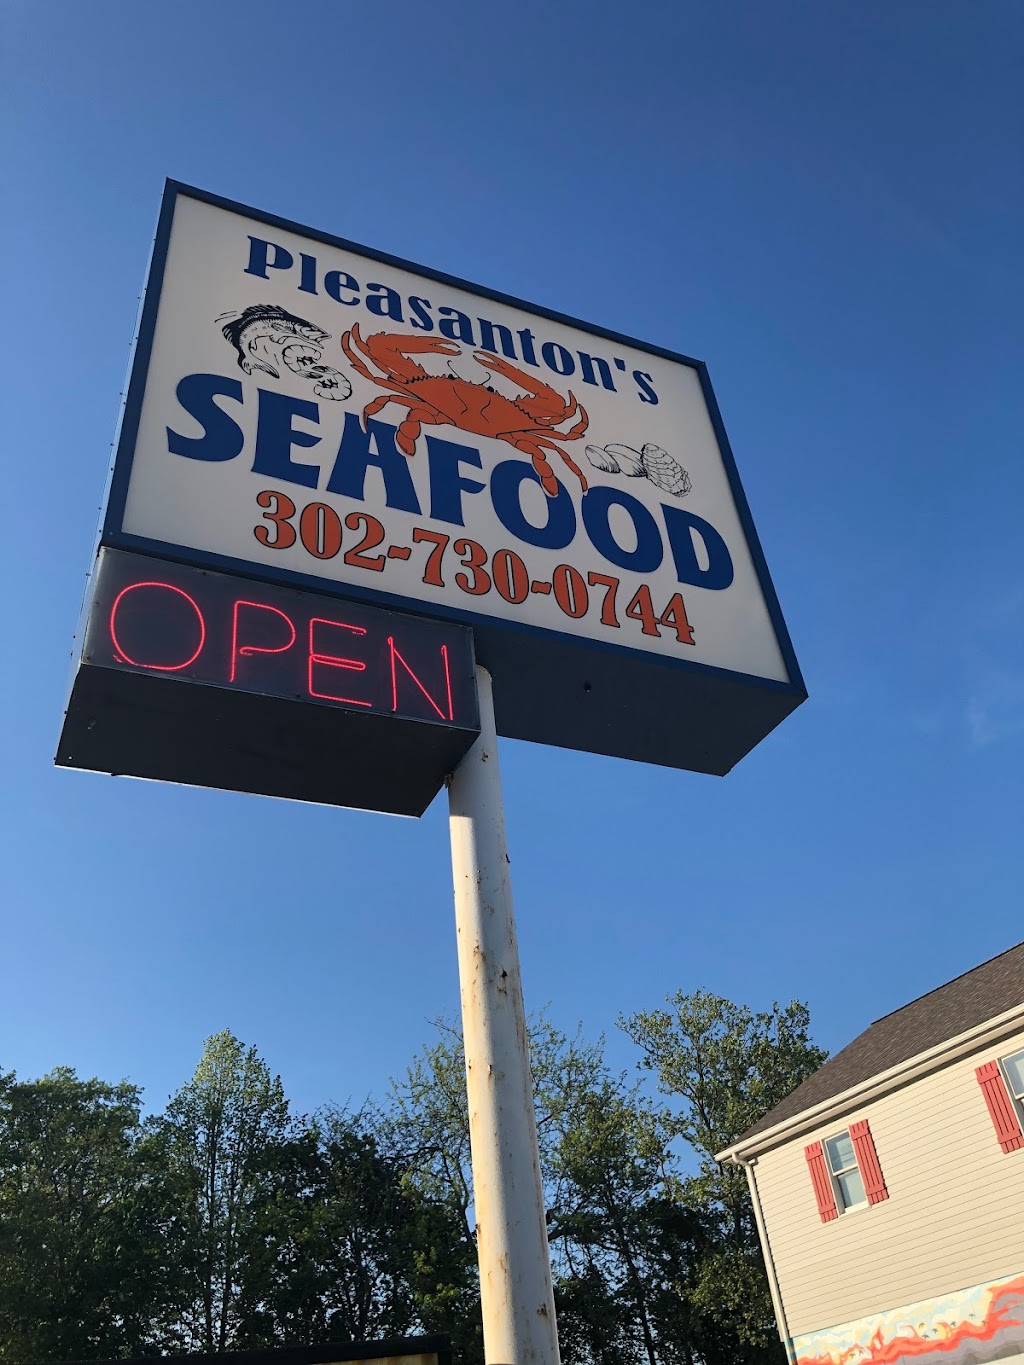 Pleasantons Seafood | 6738 N Dupont Hwy, Dover, DE 19901 | Phone: (302) 730-0744